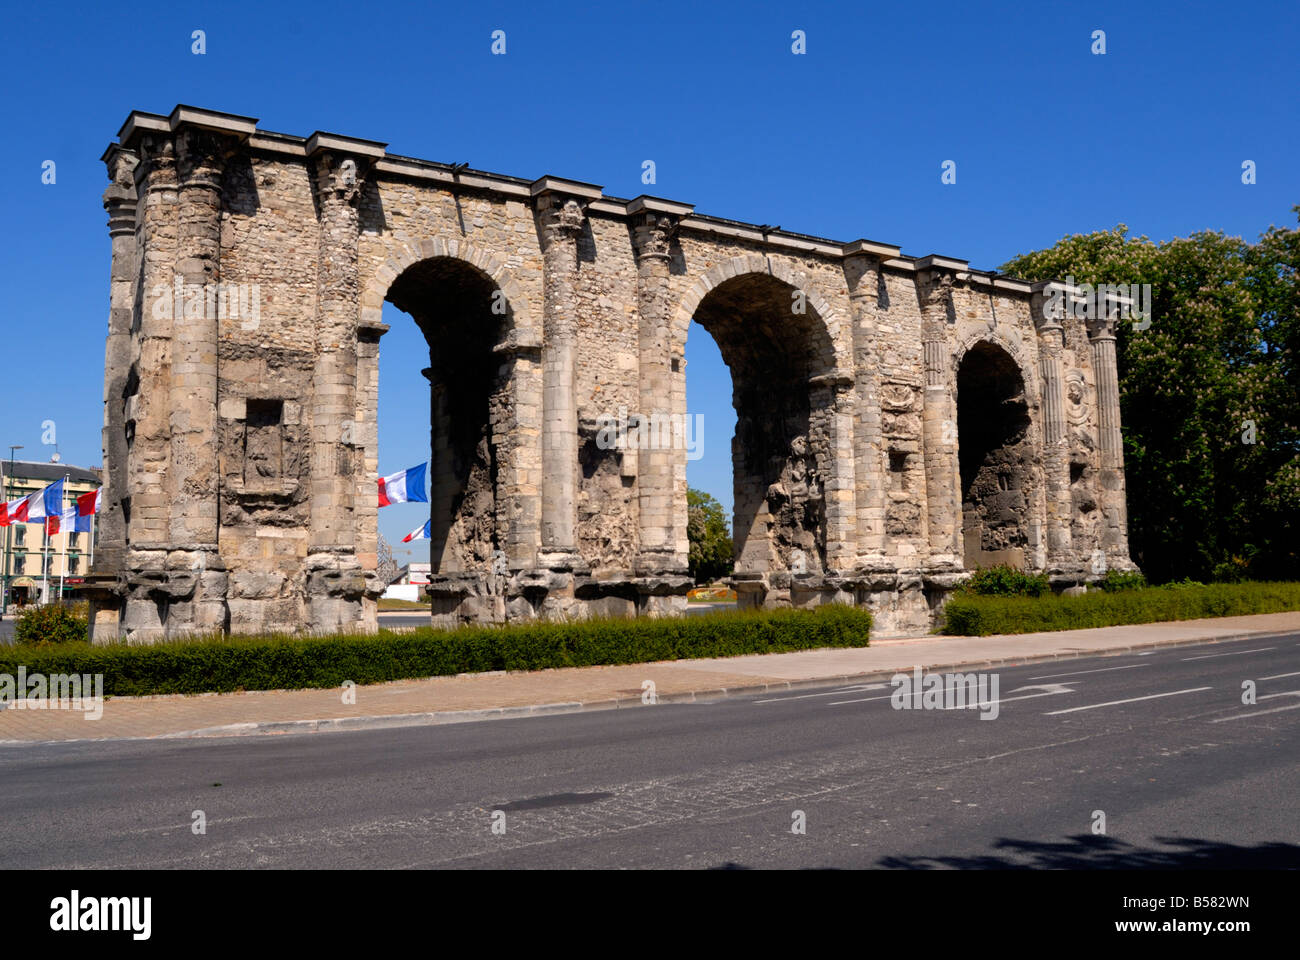 Porte de Mars Roman arch, Reims, Marne, Champagne-Ardenne, France, Europe  Stock Photo - Alamy